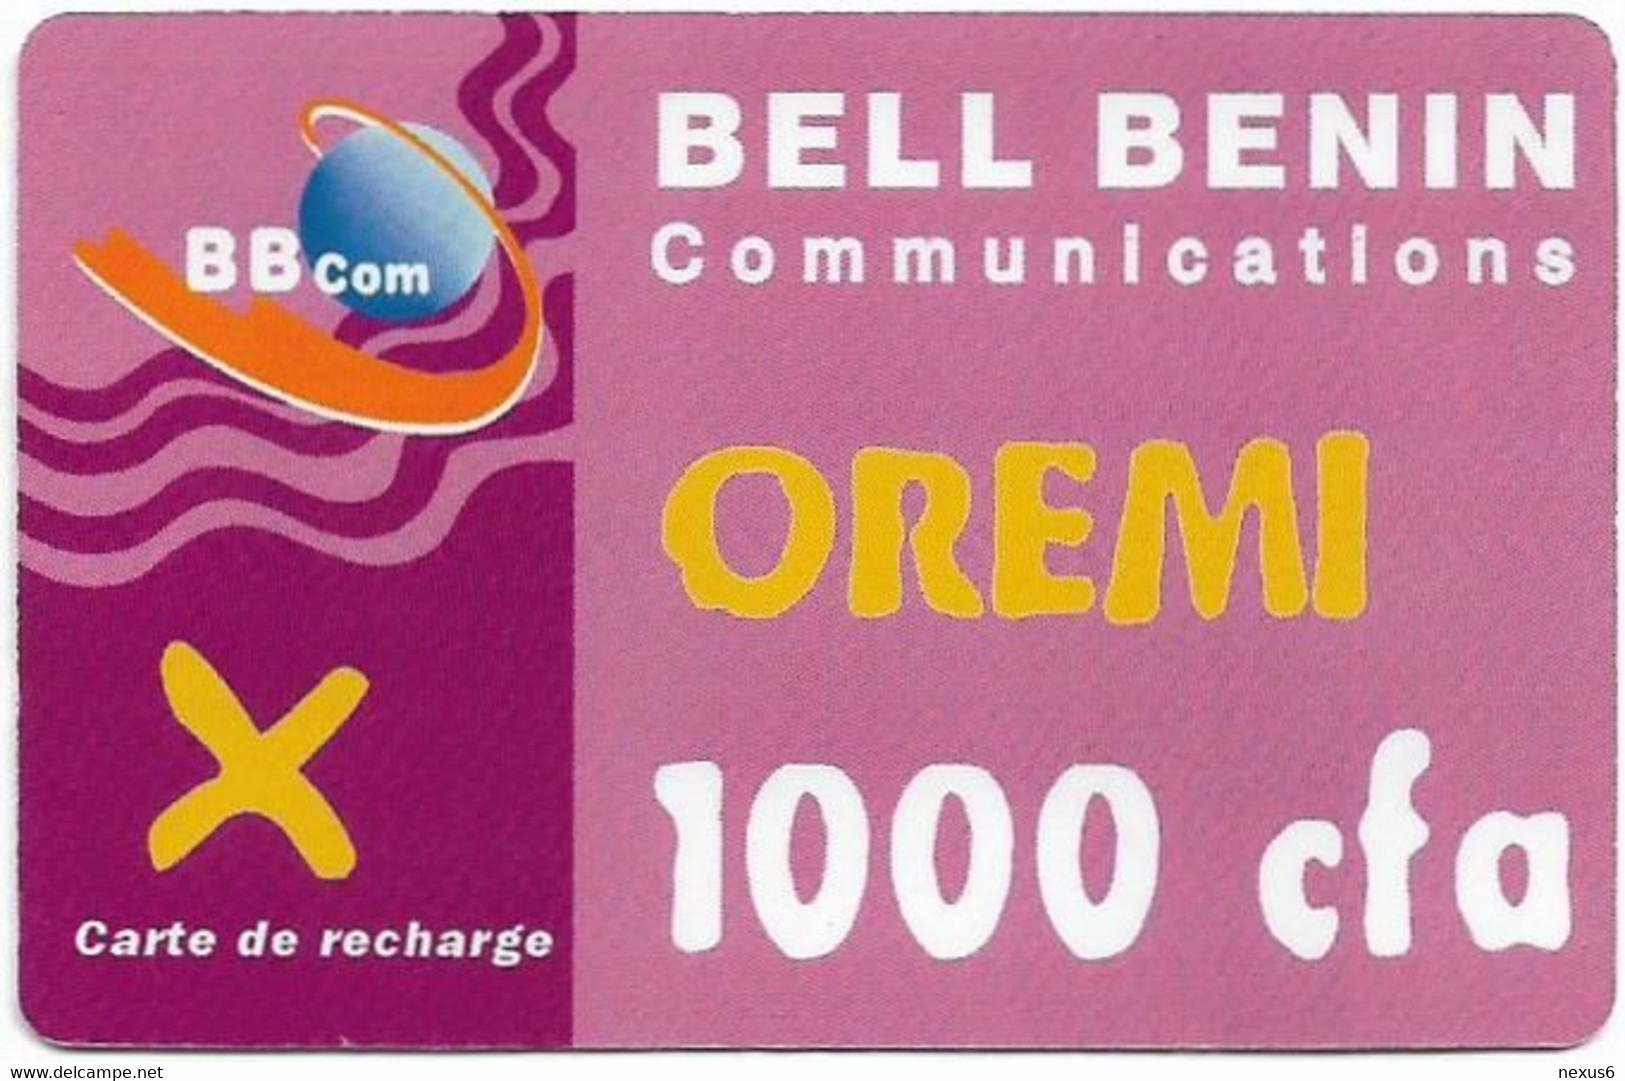 Benin - Bell Benin - Oremi Pink - GSM Refill 1.000CFA, Used - Benin